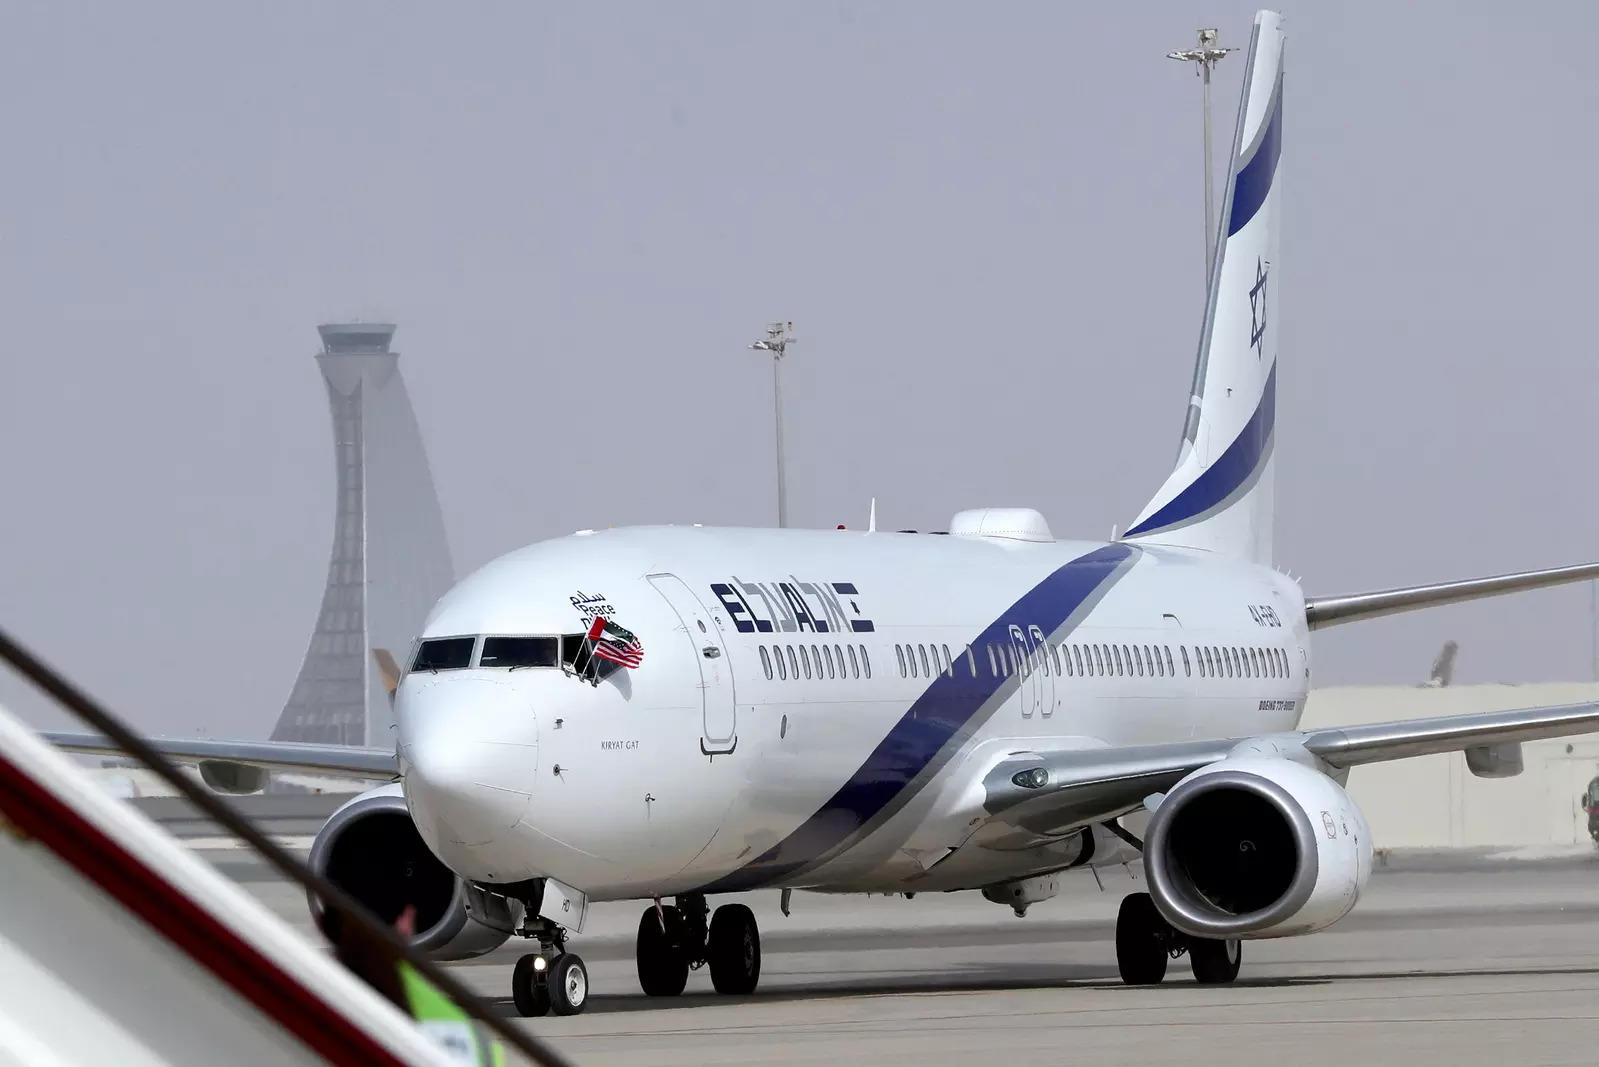   FILE PHOTO: An Israeli El Al airliner lands at Abu Dhabi International Airport, United Arab Emirates, August 31, 2020. WAM/Handout via REUTERS/File Photo